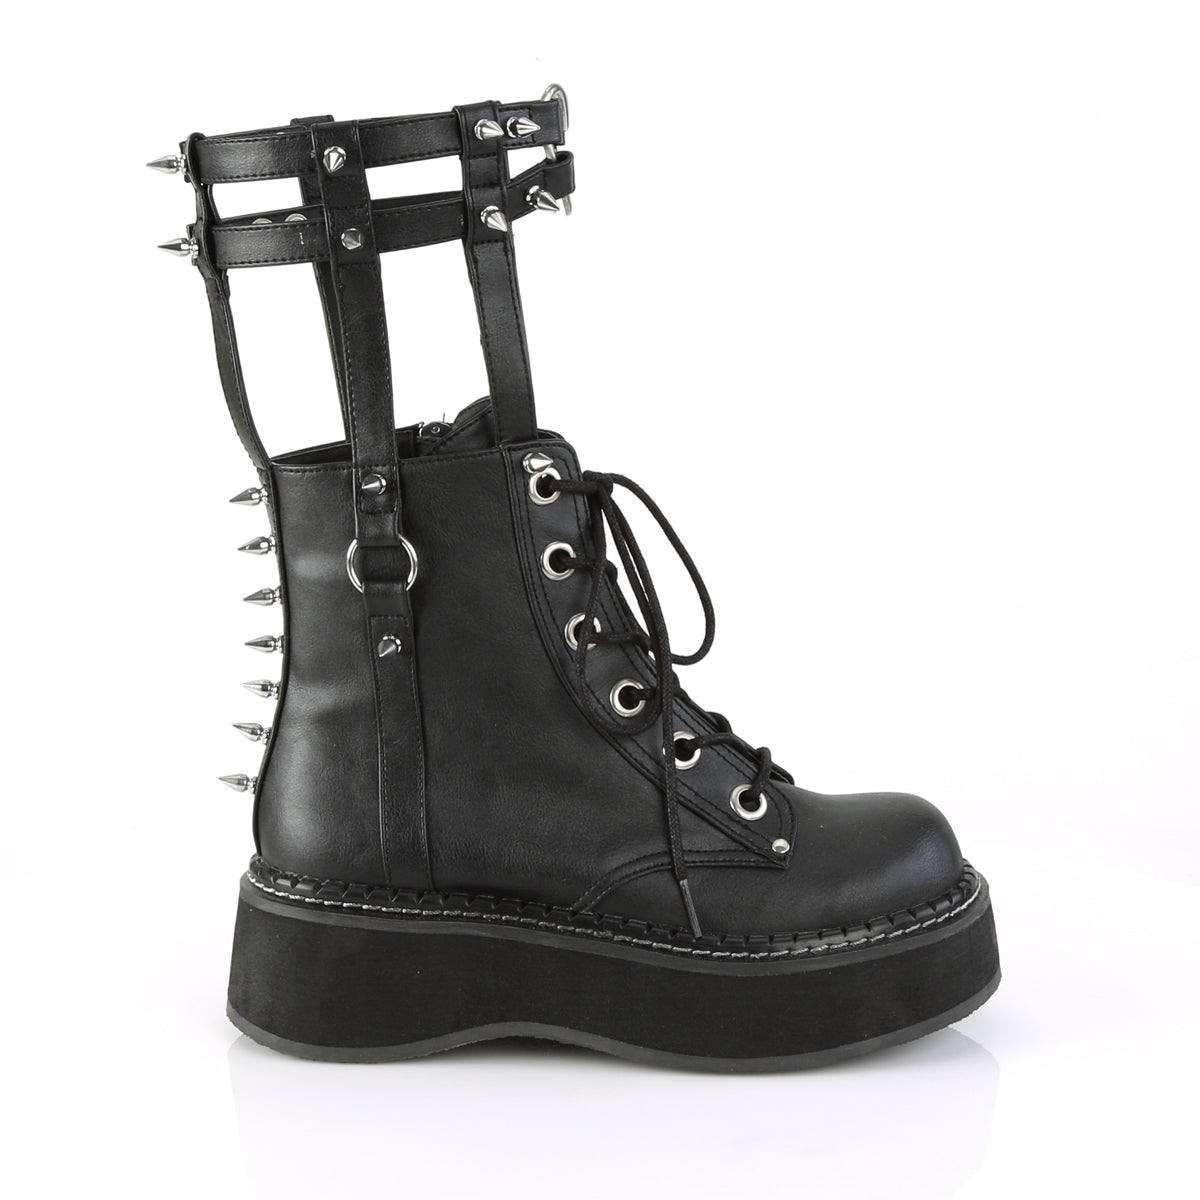 EMILY-357 Demonia Black Vegan Leather Women's Mid-Calf & Knee High Boots [Alternative Footwear]